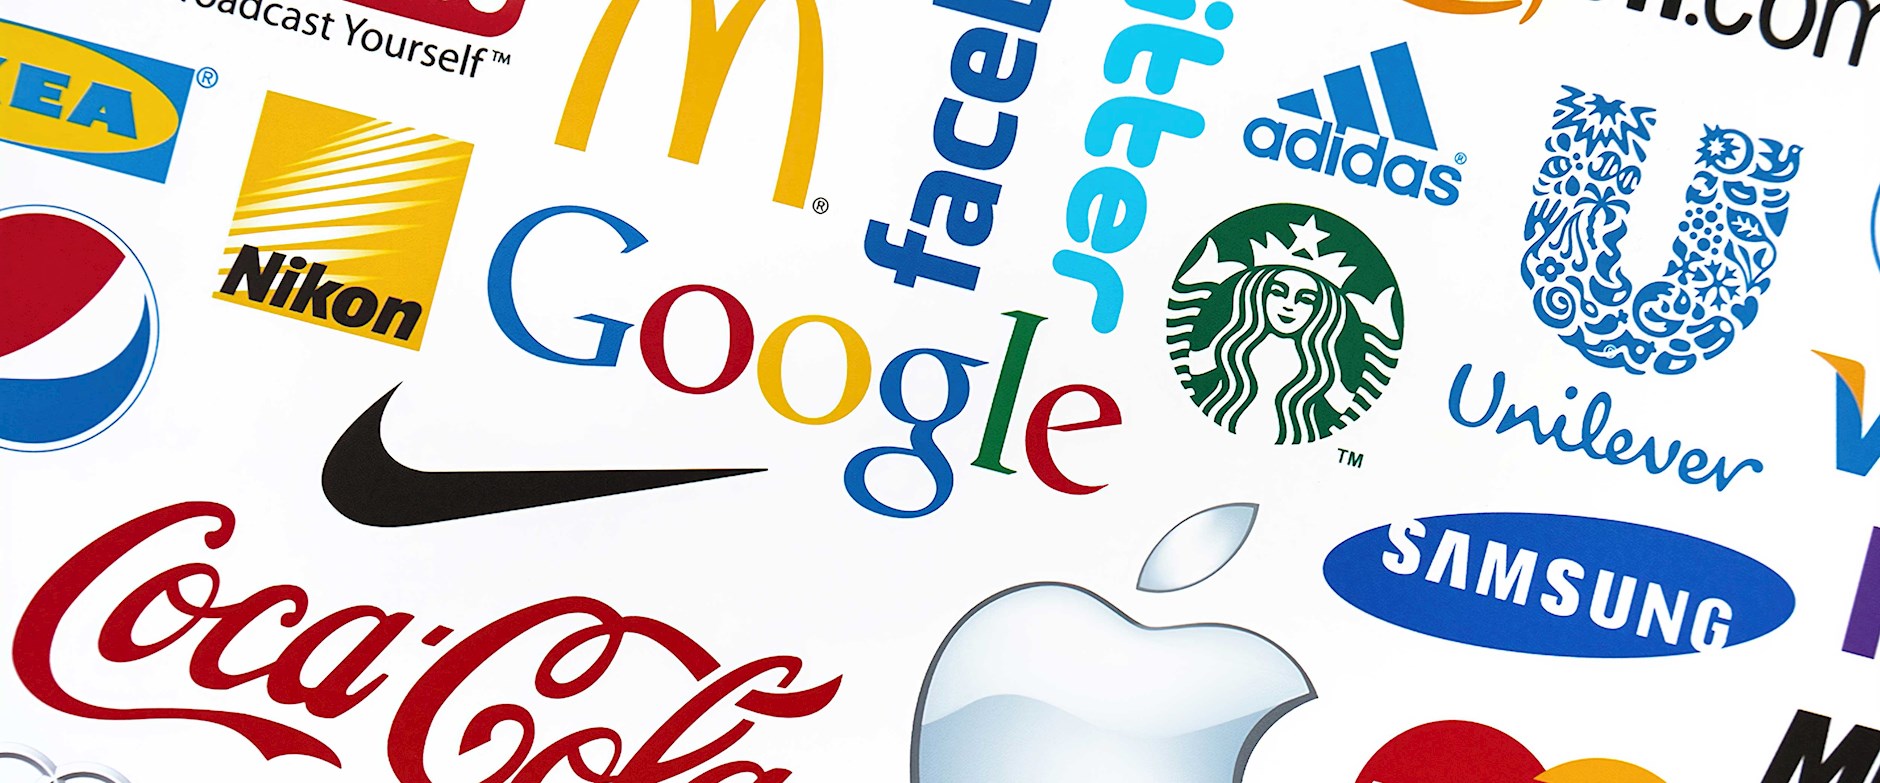 Corporate logo collage